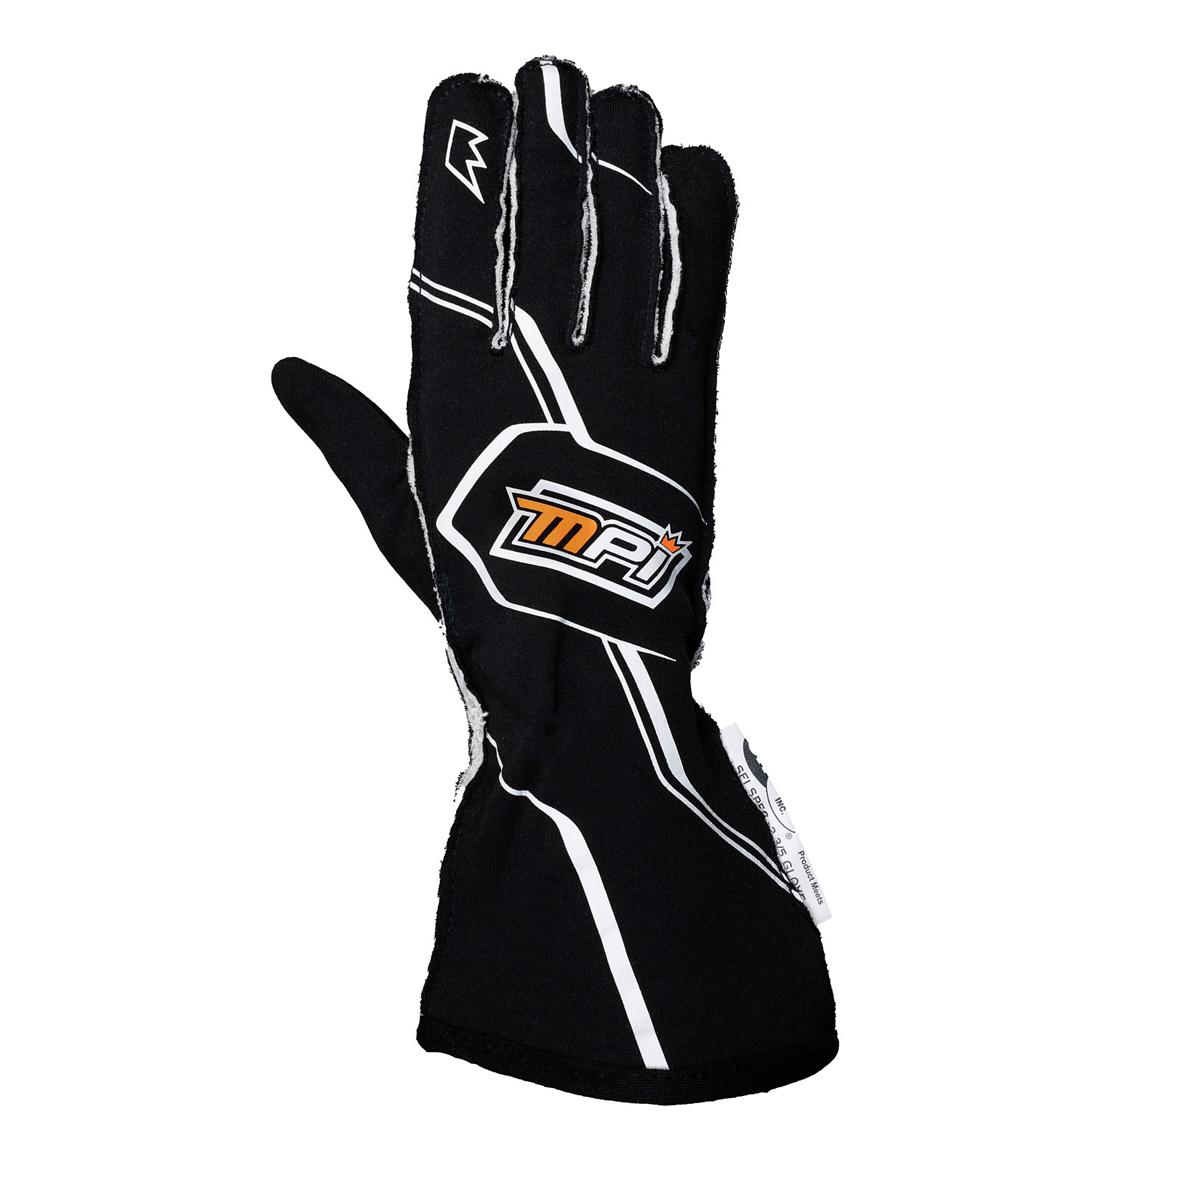 MPI USA MPI-GL-B-XL - Gloves, Driving, SFI 3.3/5, Double Layer, Nomex, Padded Palm, Black / White, X-Large, Pair